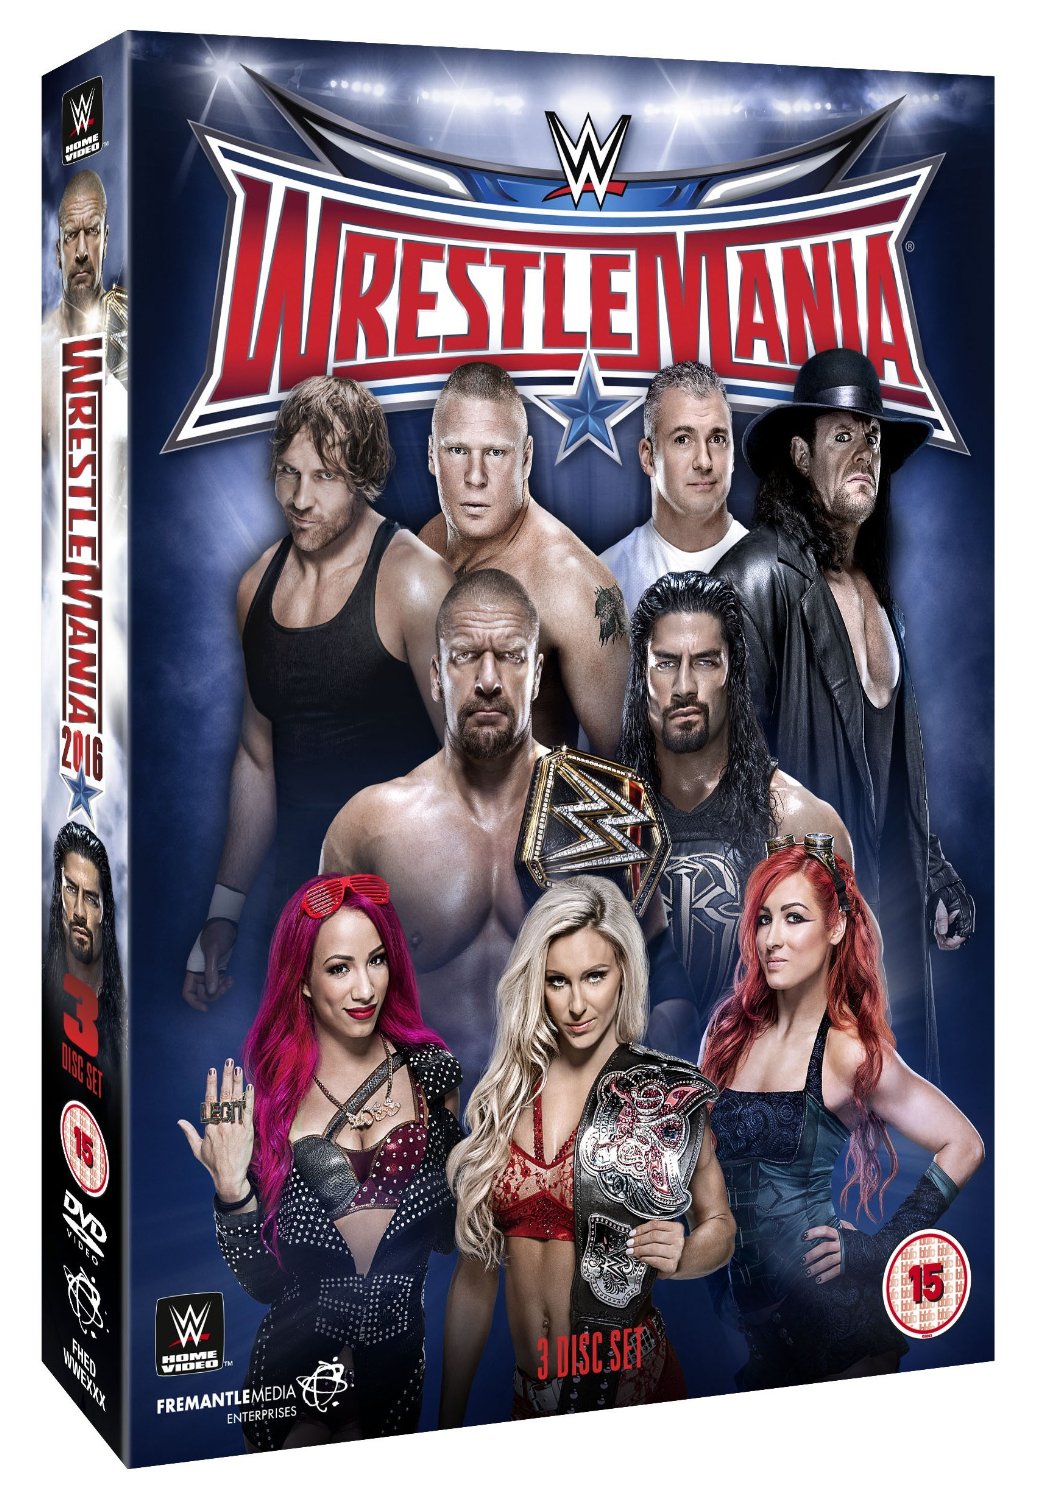 DVD Review: WWE WrestleMania 32.